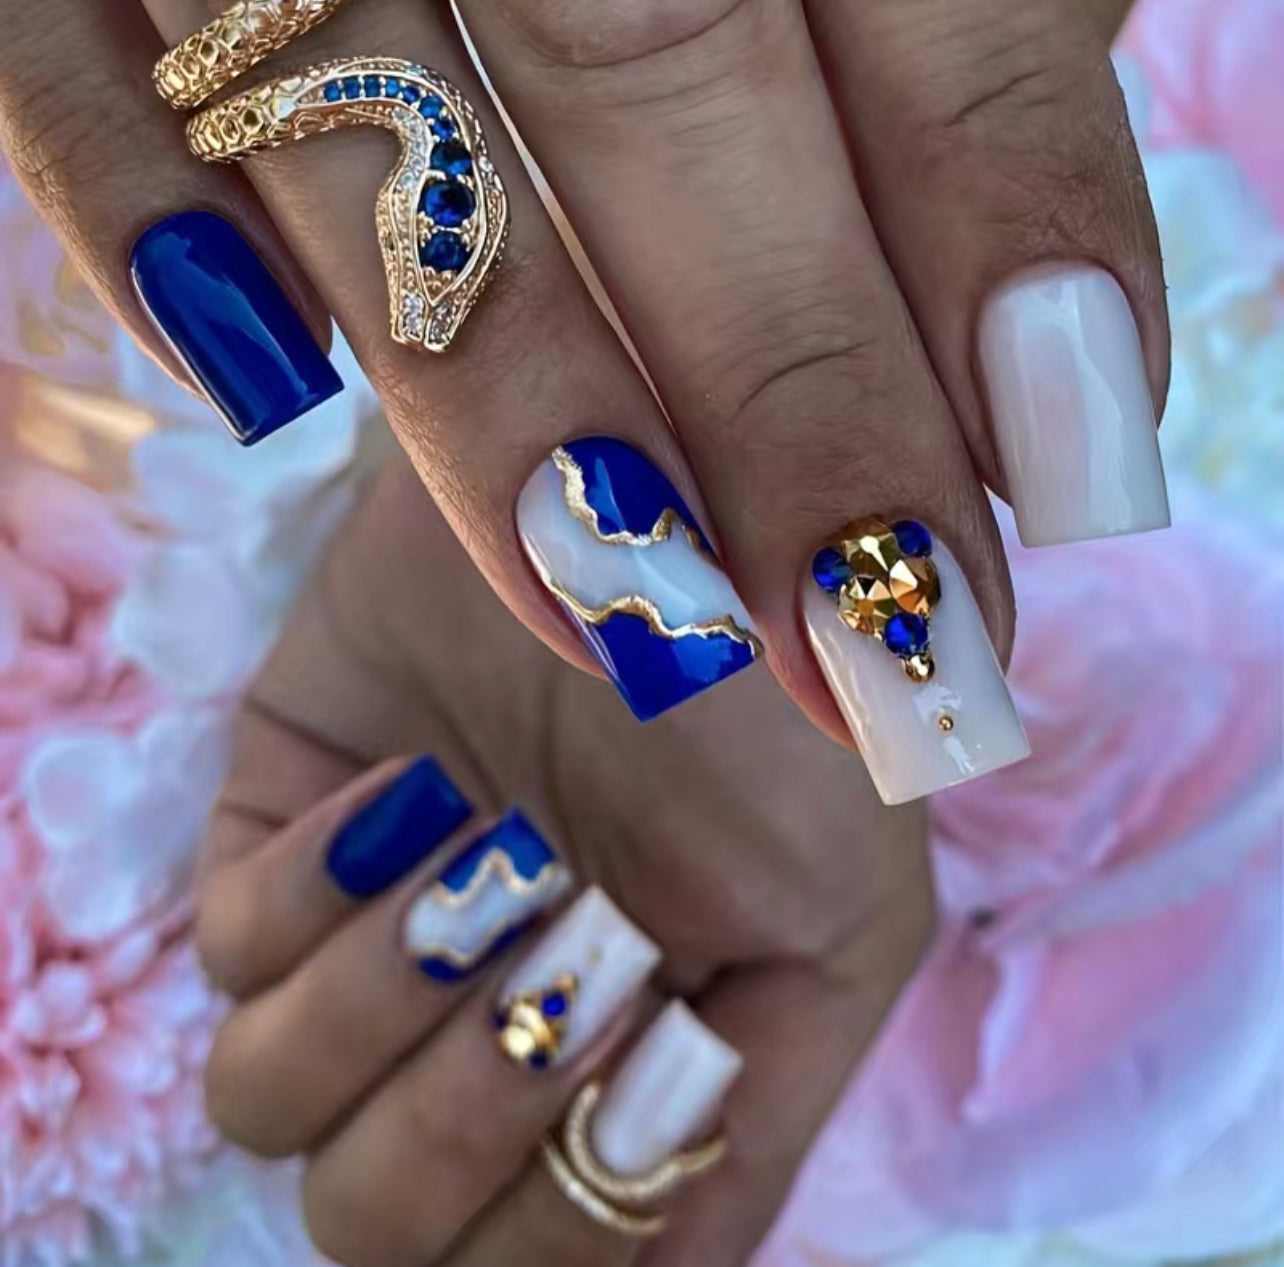 royal blue and white nail designs